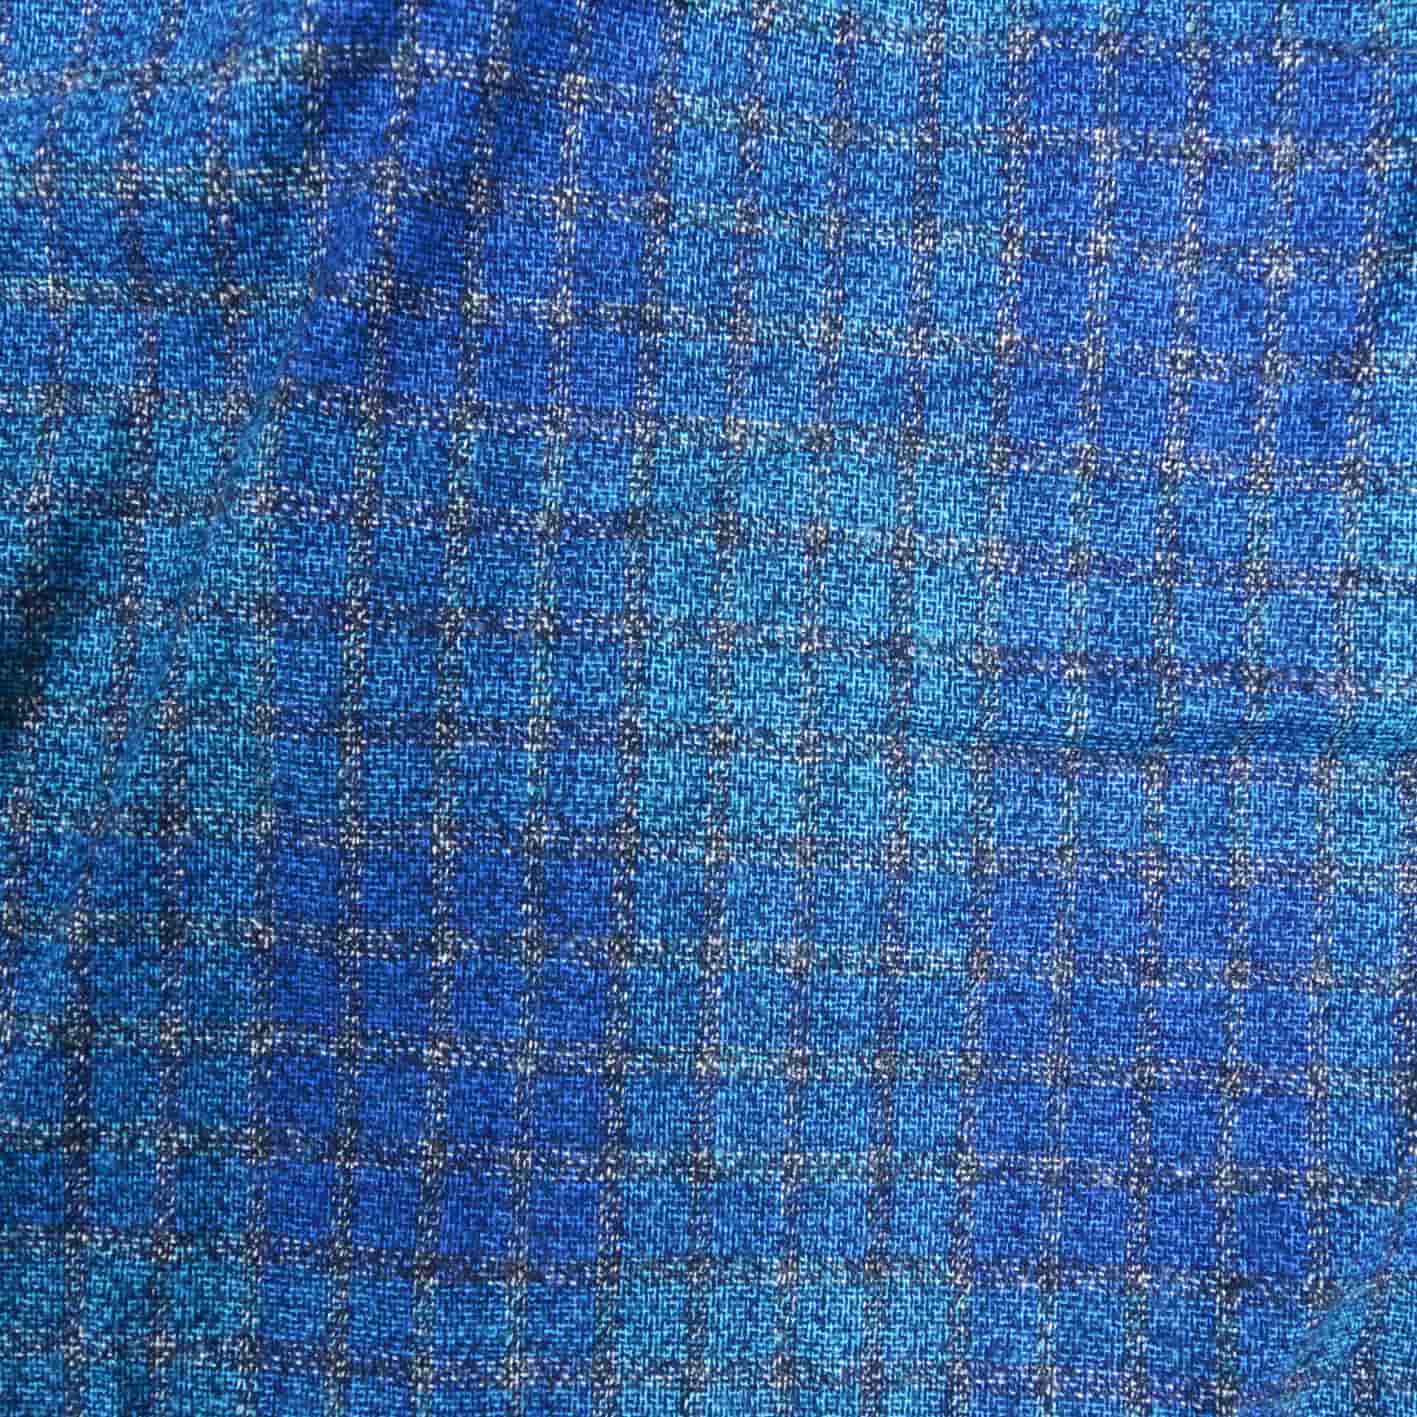 Stoff-Wolle in Blau